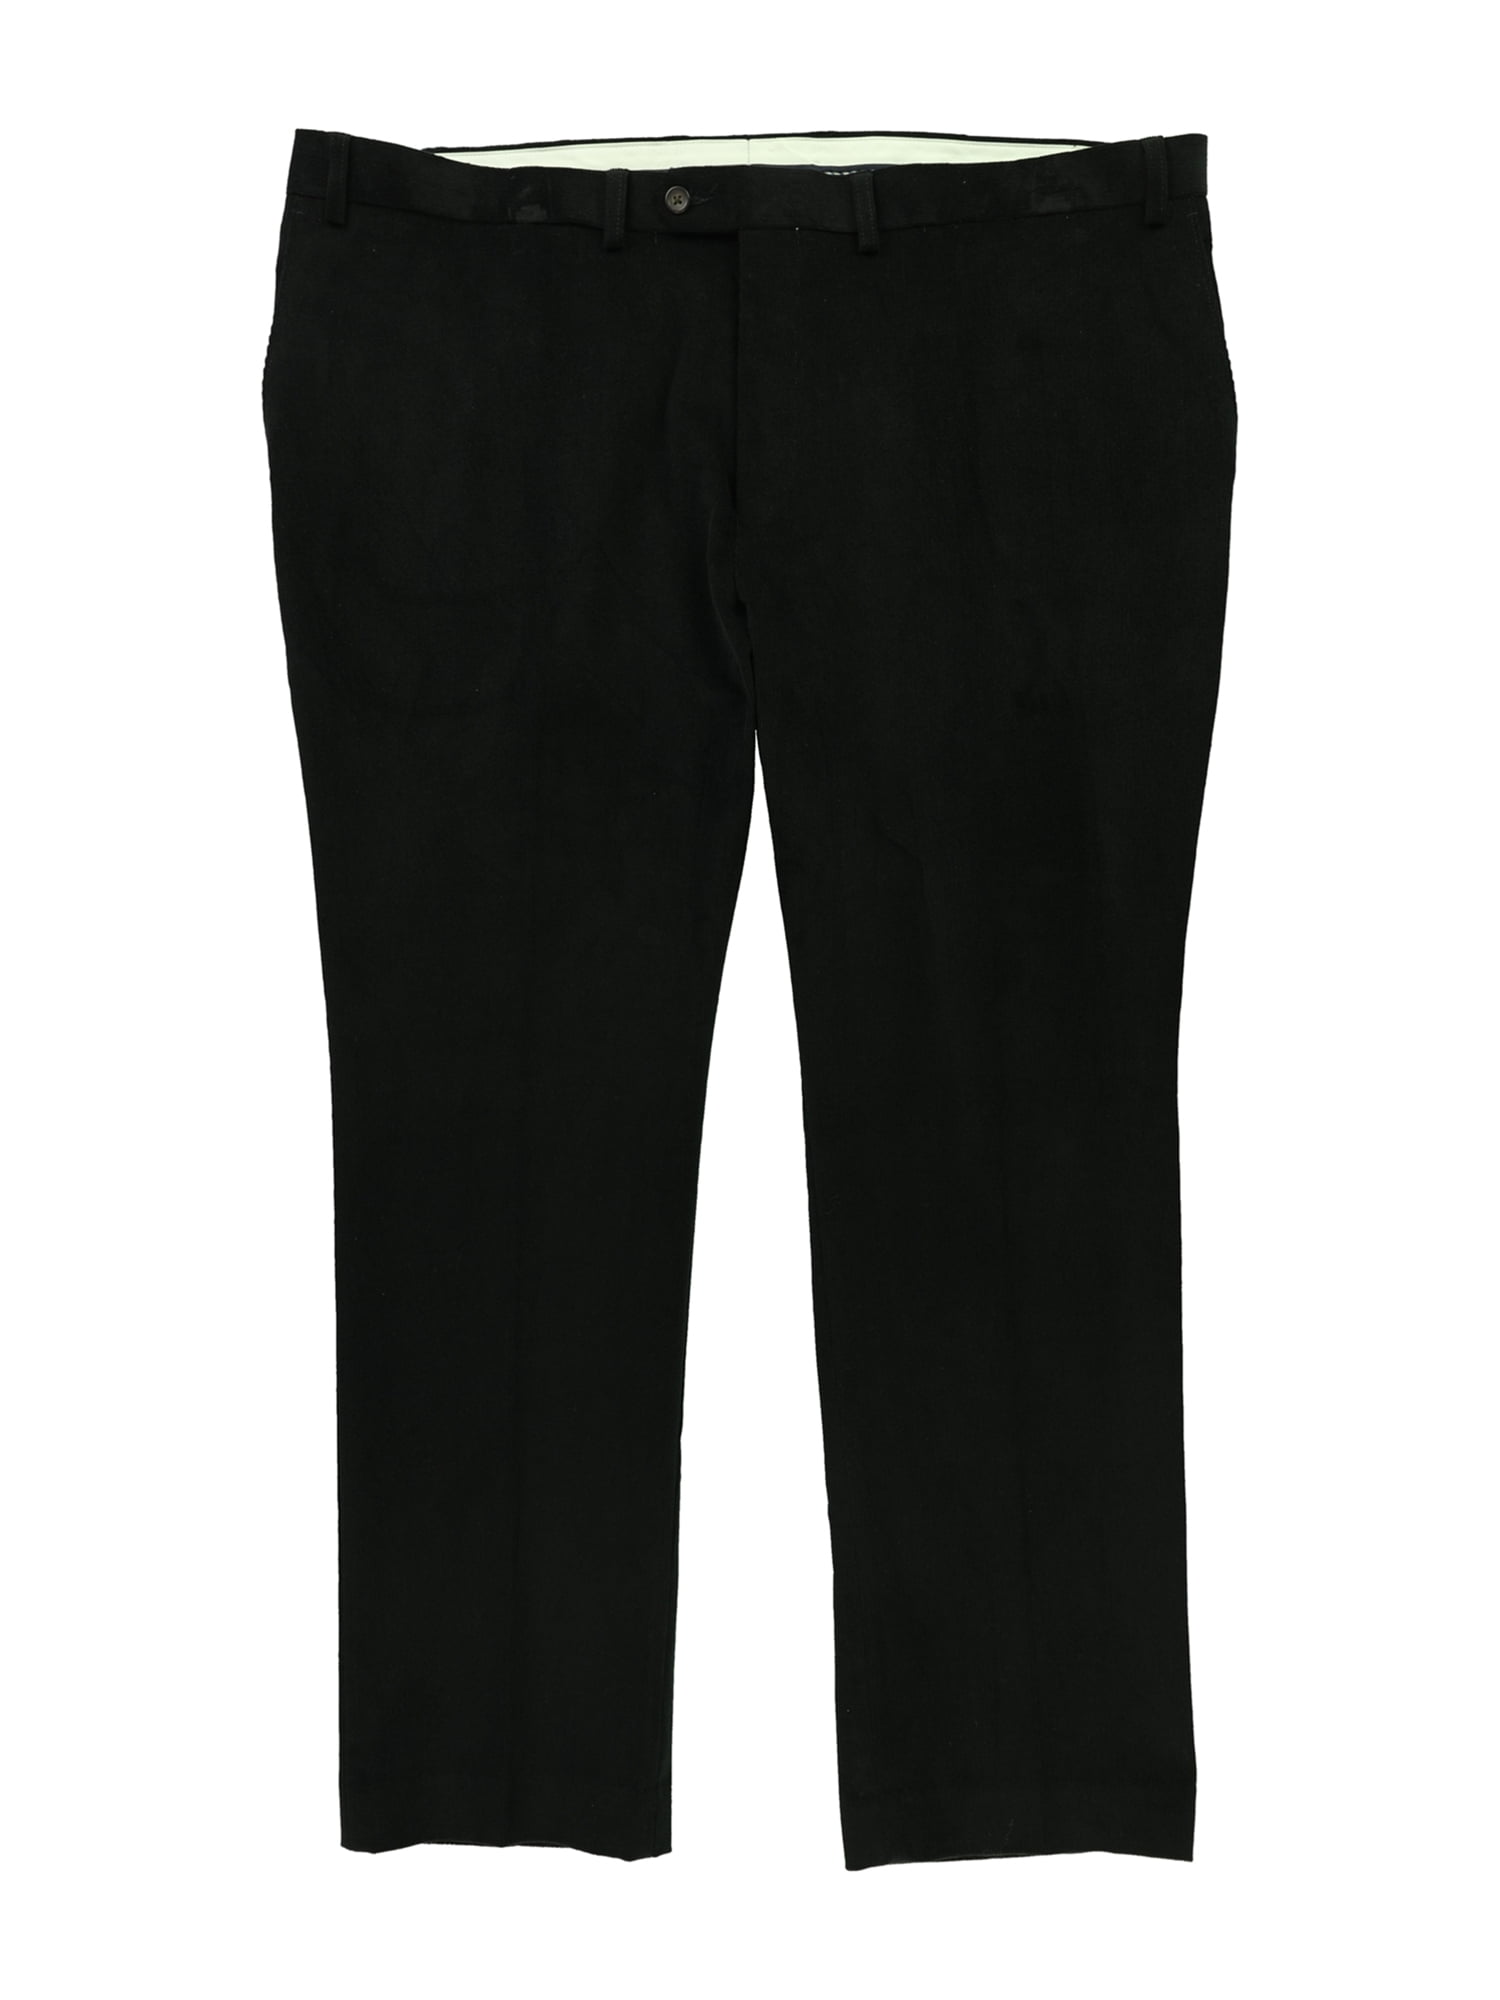 Ralph Lauren Mens Stretch Casual Corduroy Pants black 30x30 | Walmart ...